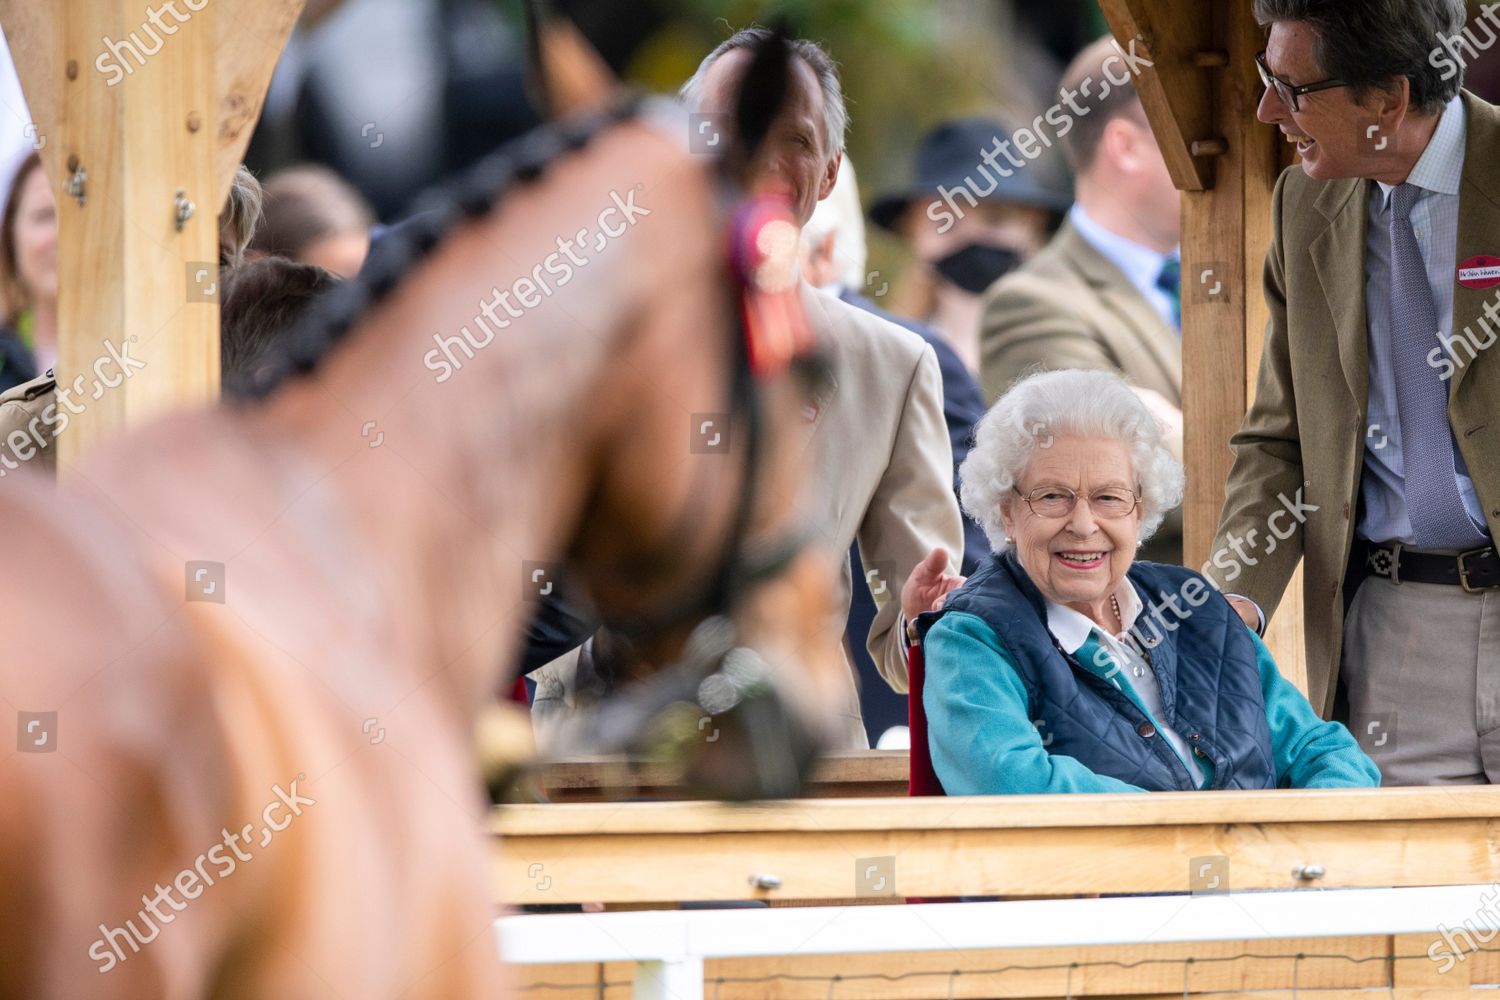 royal-windsor-horse-show-day-3-uk-shutterstock-editorial-12194393ad.jpg